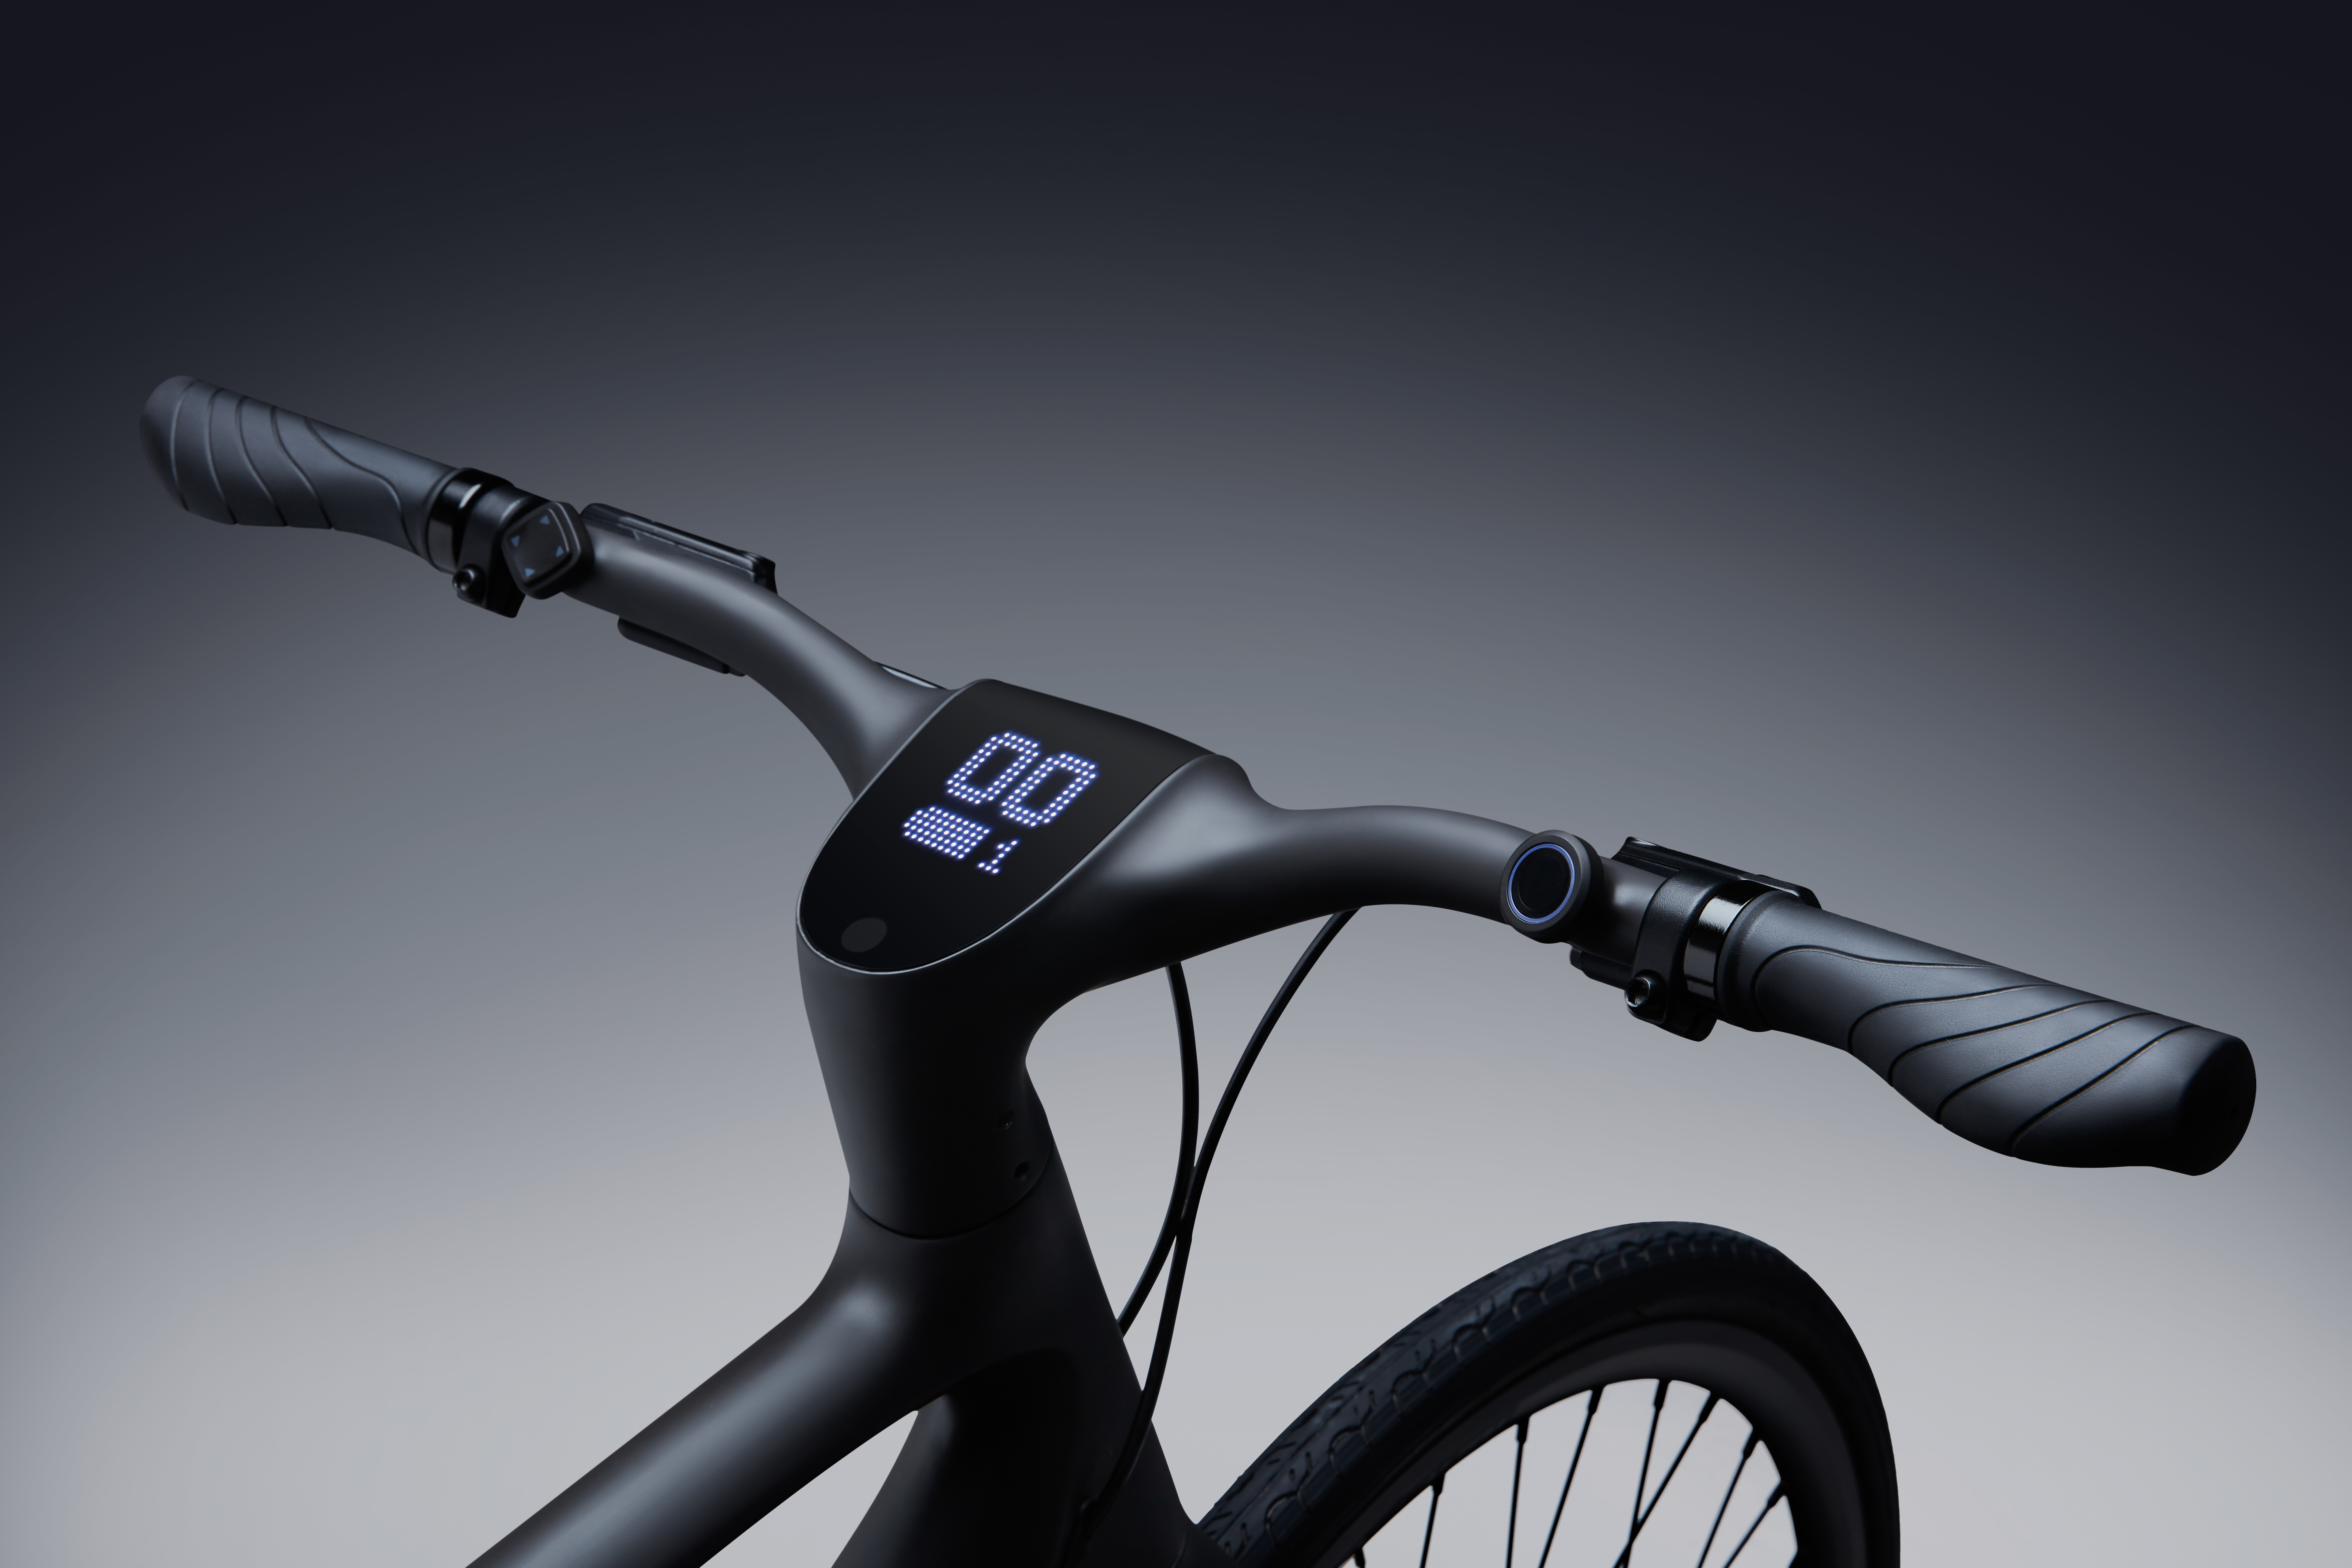 Citybike Akku Large, 29 Abnehmbaren Wh, Carbon Smart URTOPIA E-Bike (Laufradgröße: Lyra) mit Leichtes Large Unisex-Rad, 352.8 Zoll,